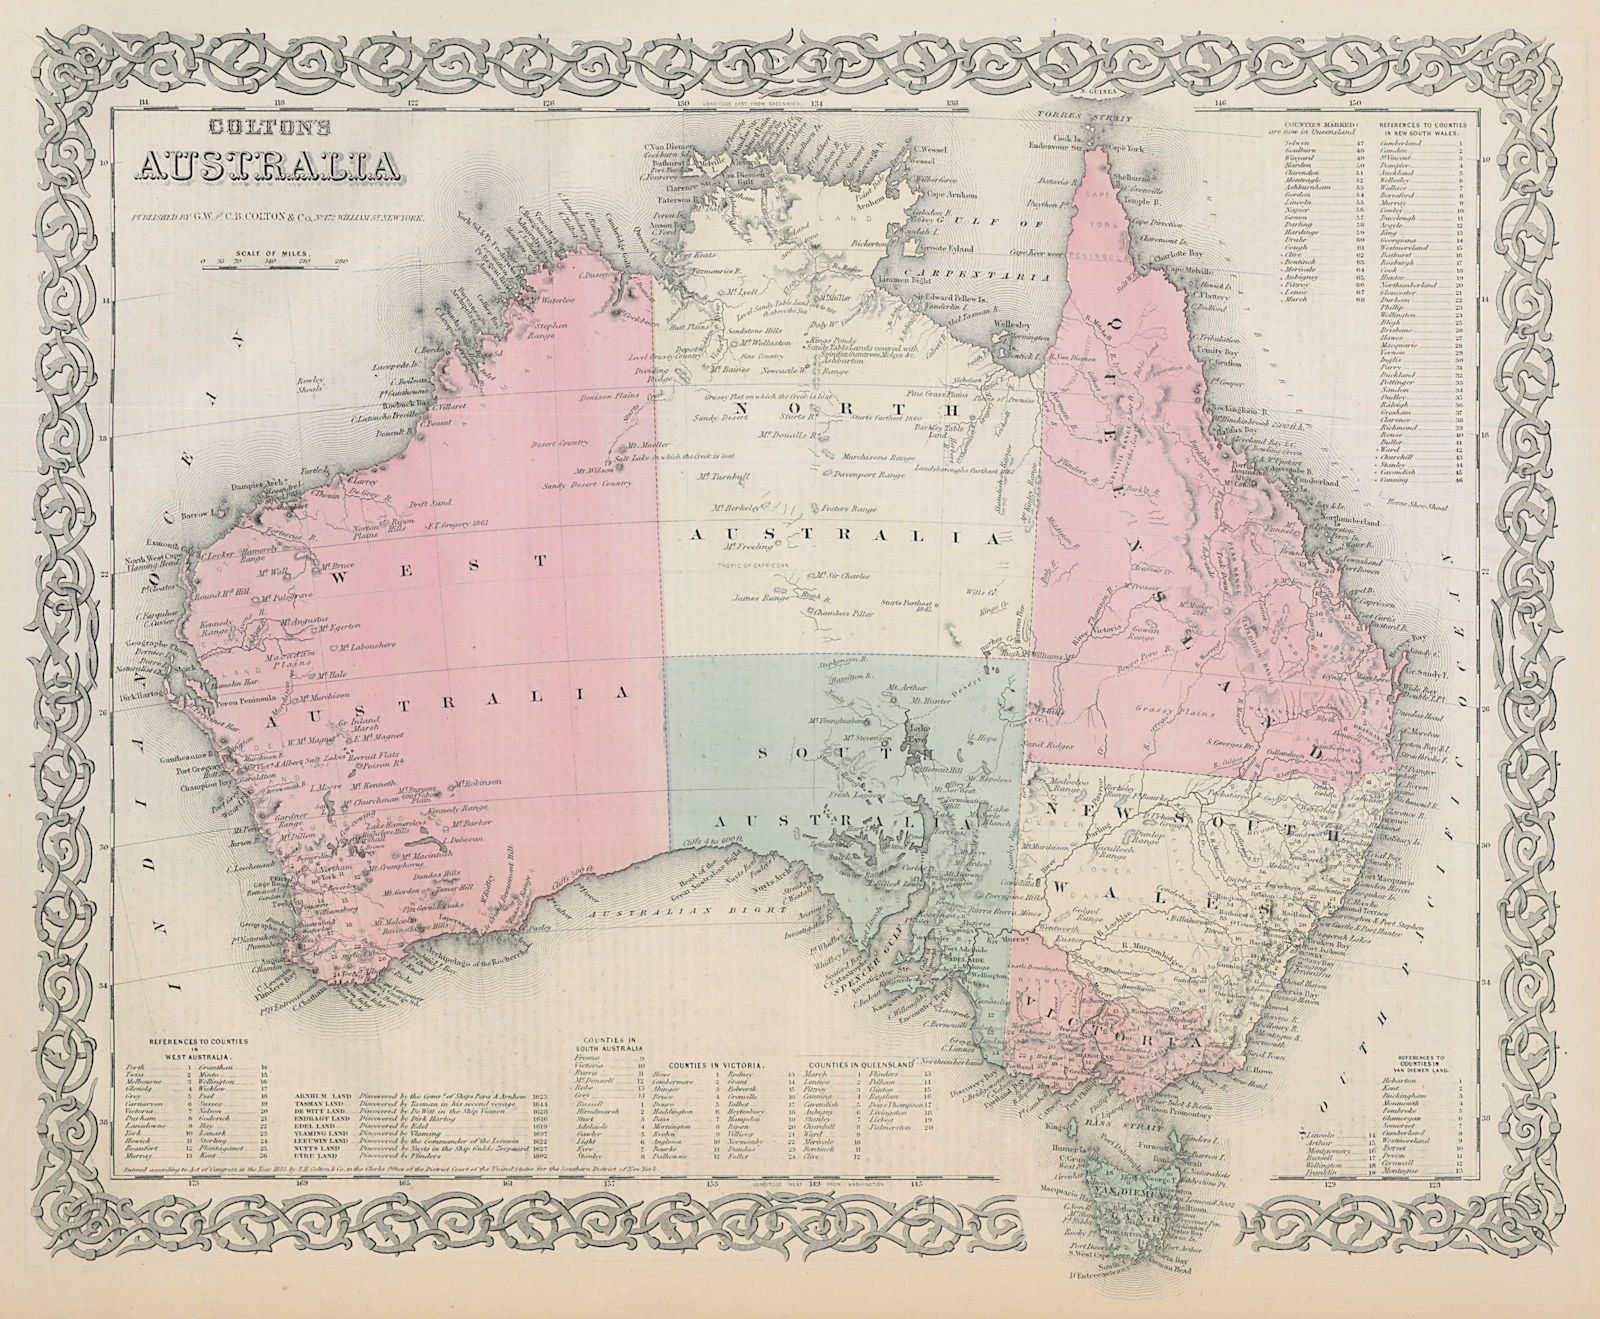 Associate Product Colton's Australia. Queensland with original borders. Antique map 1869 old